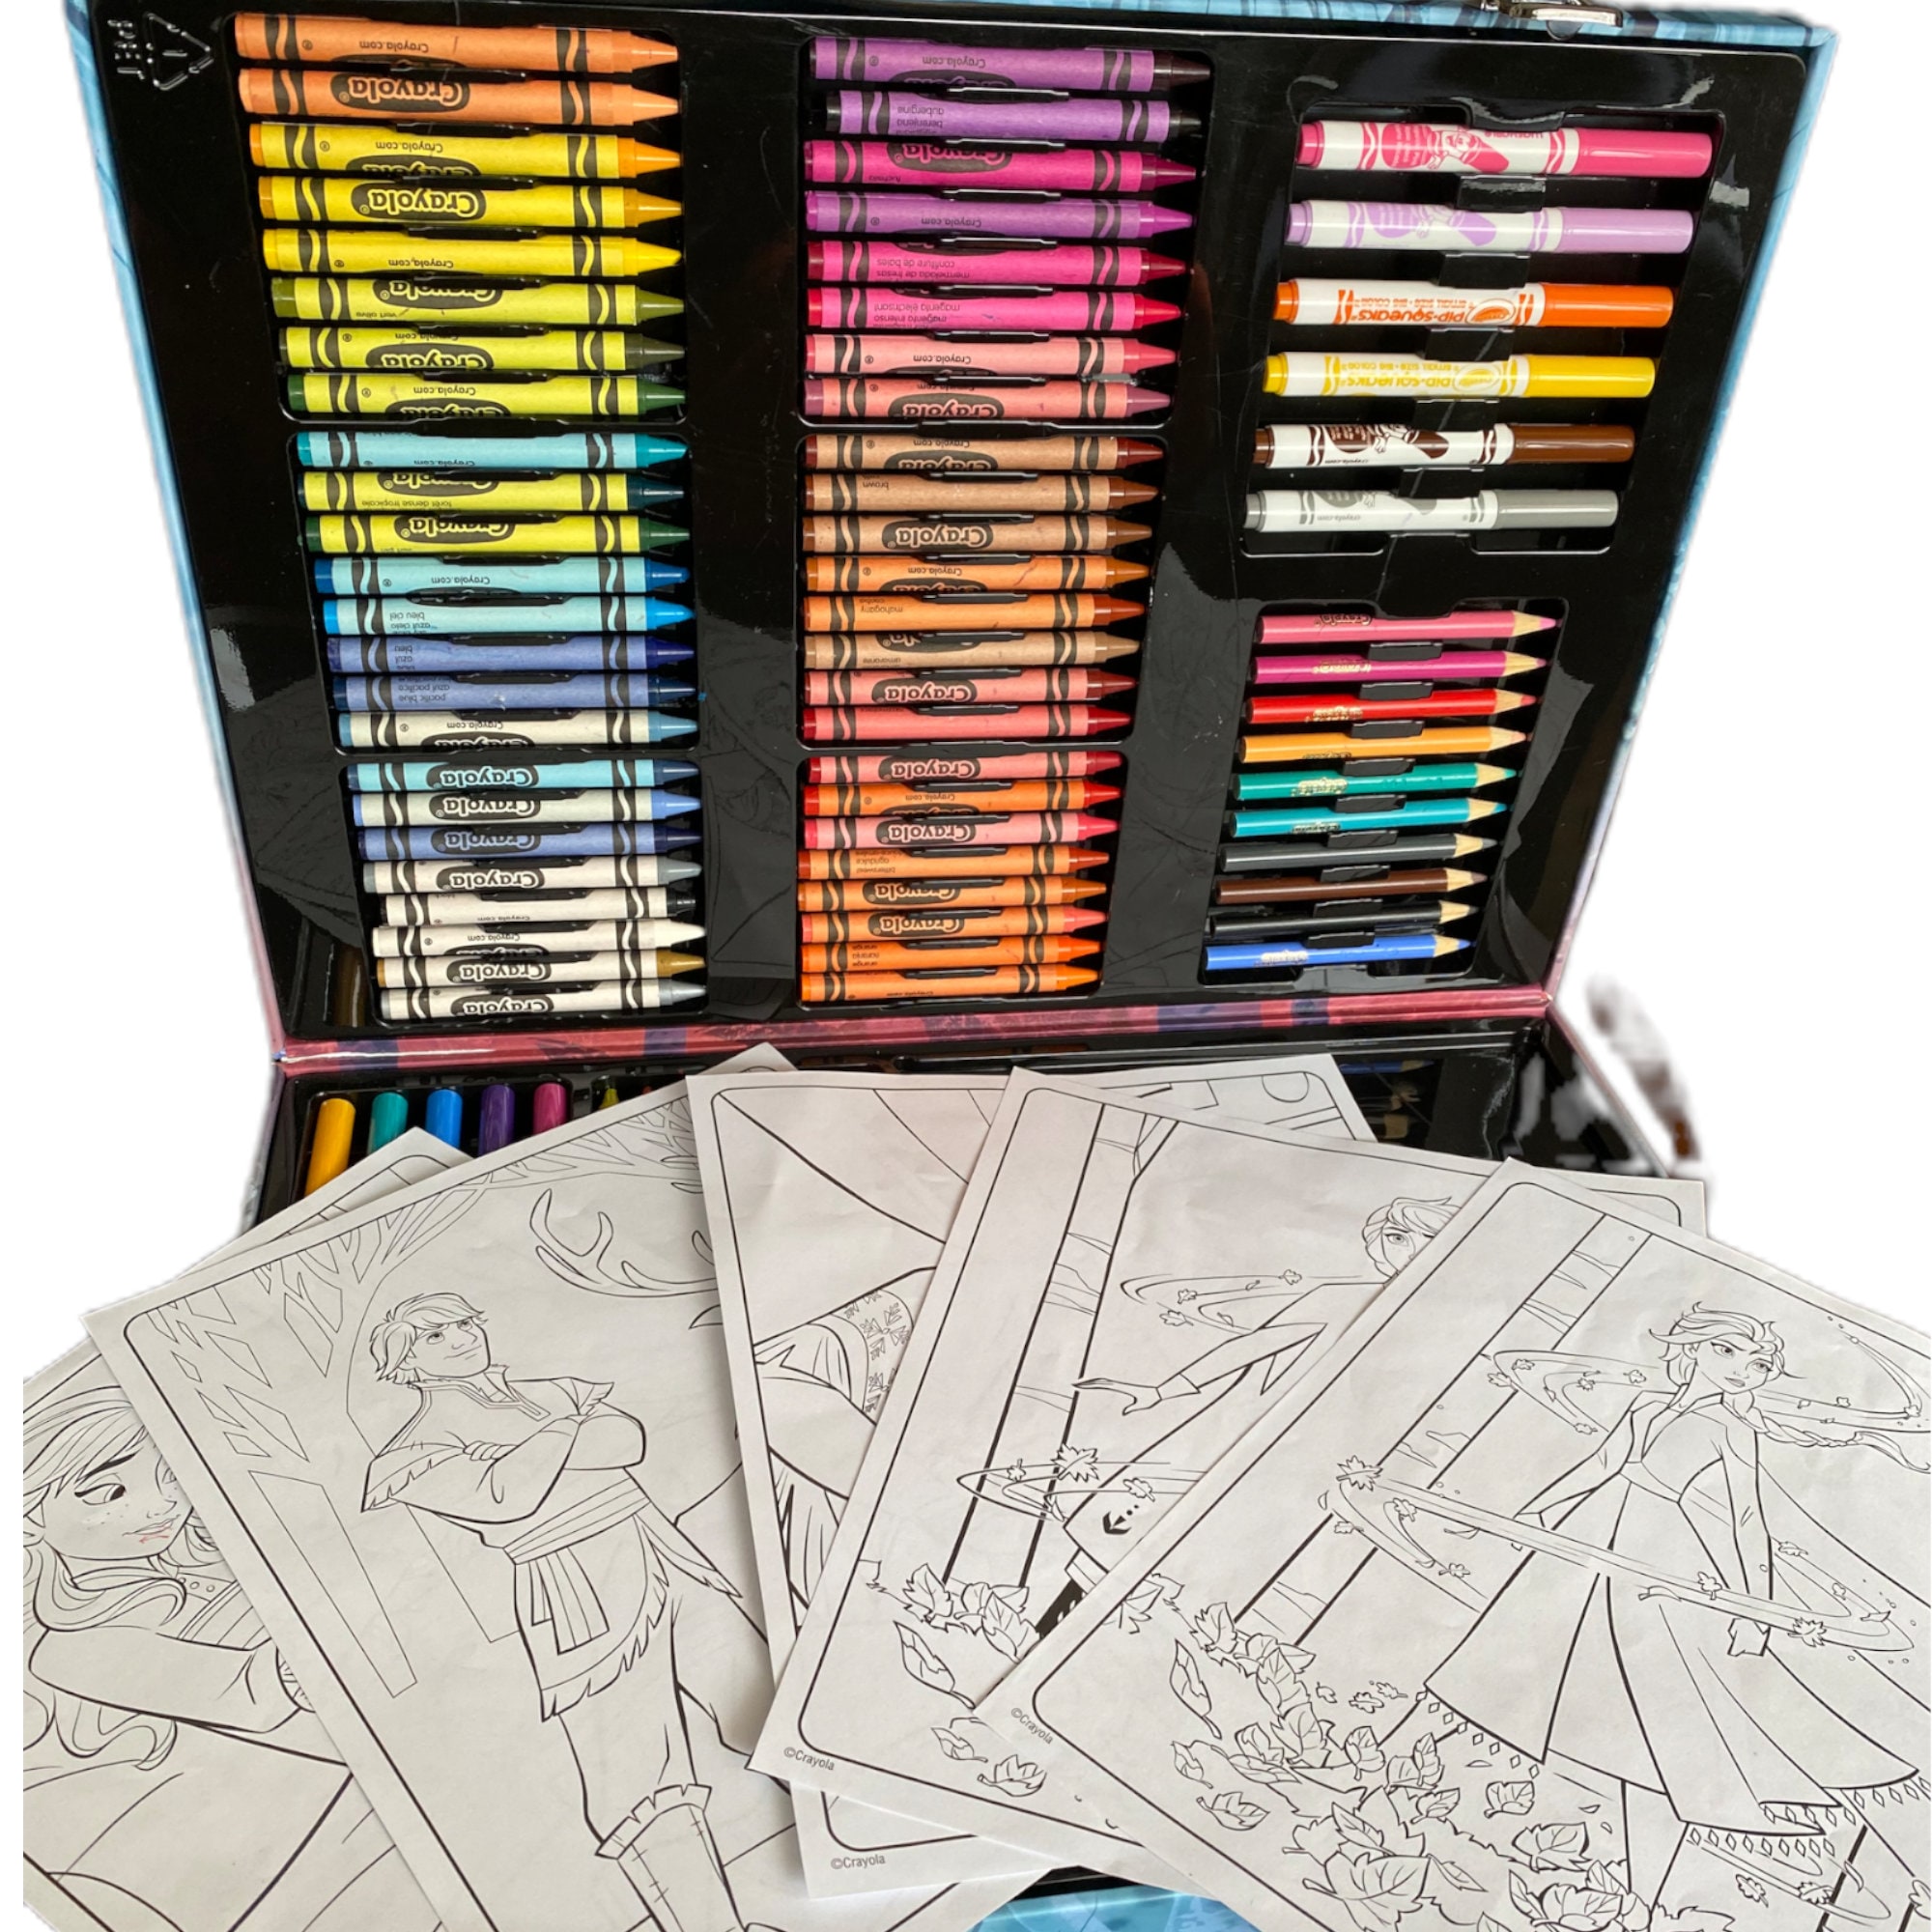 Crayola Frozen 2 Inspiration Art Case - Shop leschampions Illustration,  Painting & Calligraphy - Pinkoi